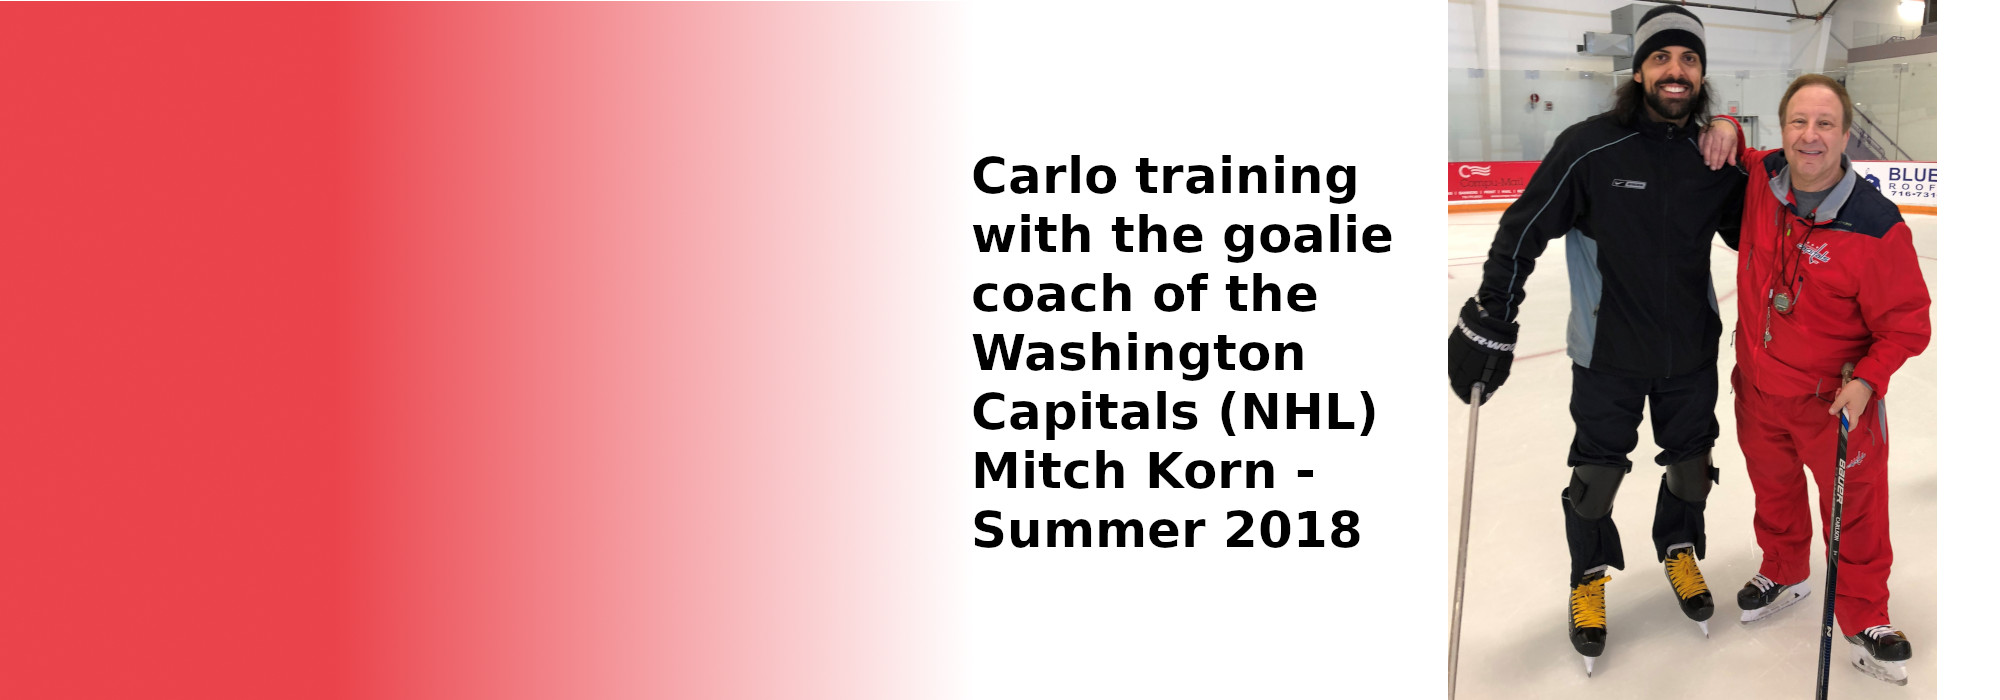 carlo_training